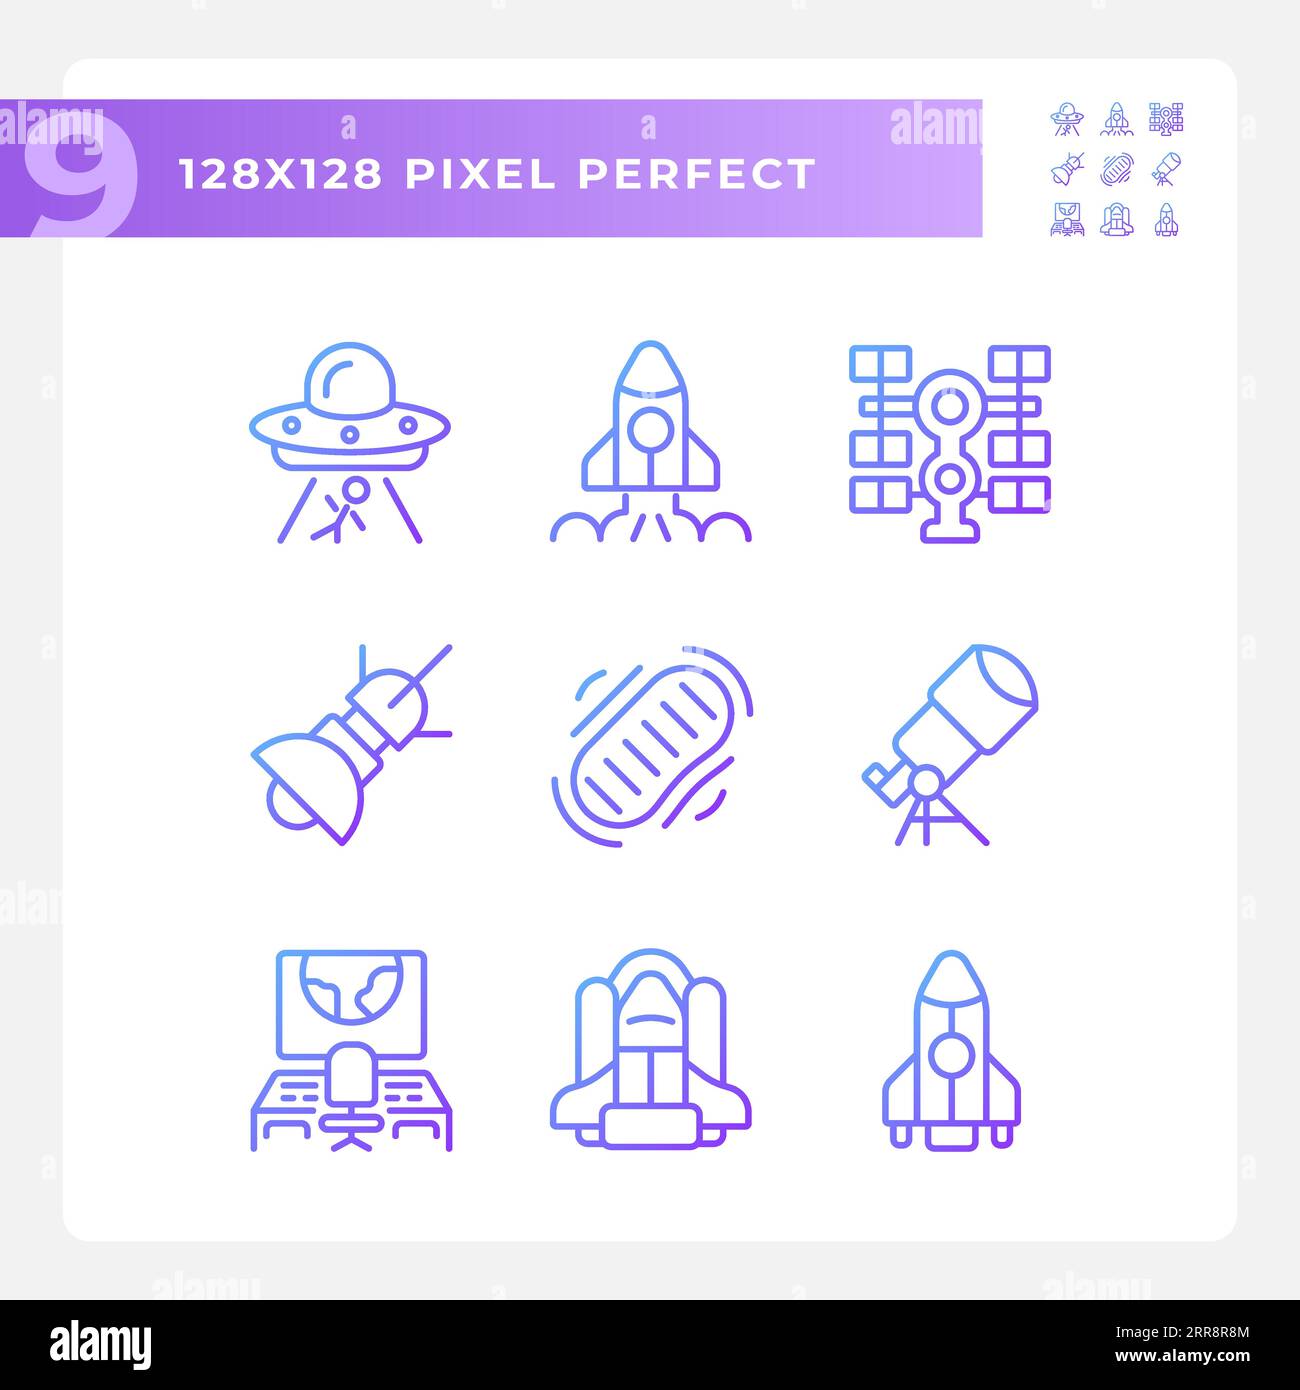 Science-Fiction-Pixel-Symbole mit perfektem Gradienten und linearen Vektoren Stock Vektor